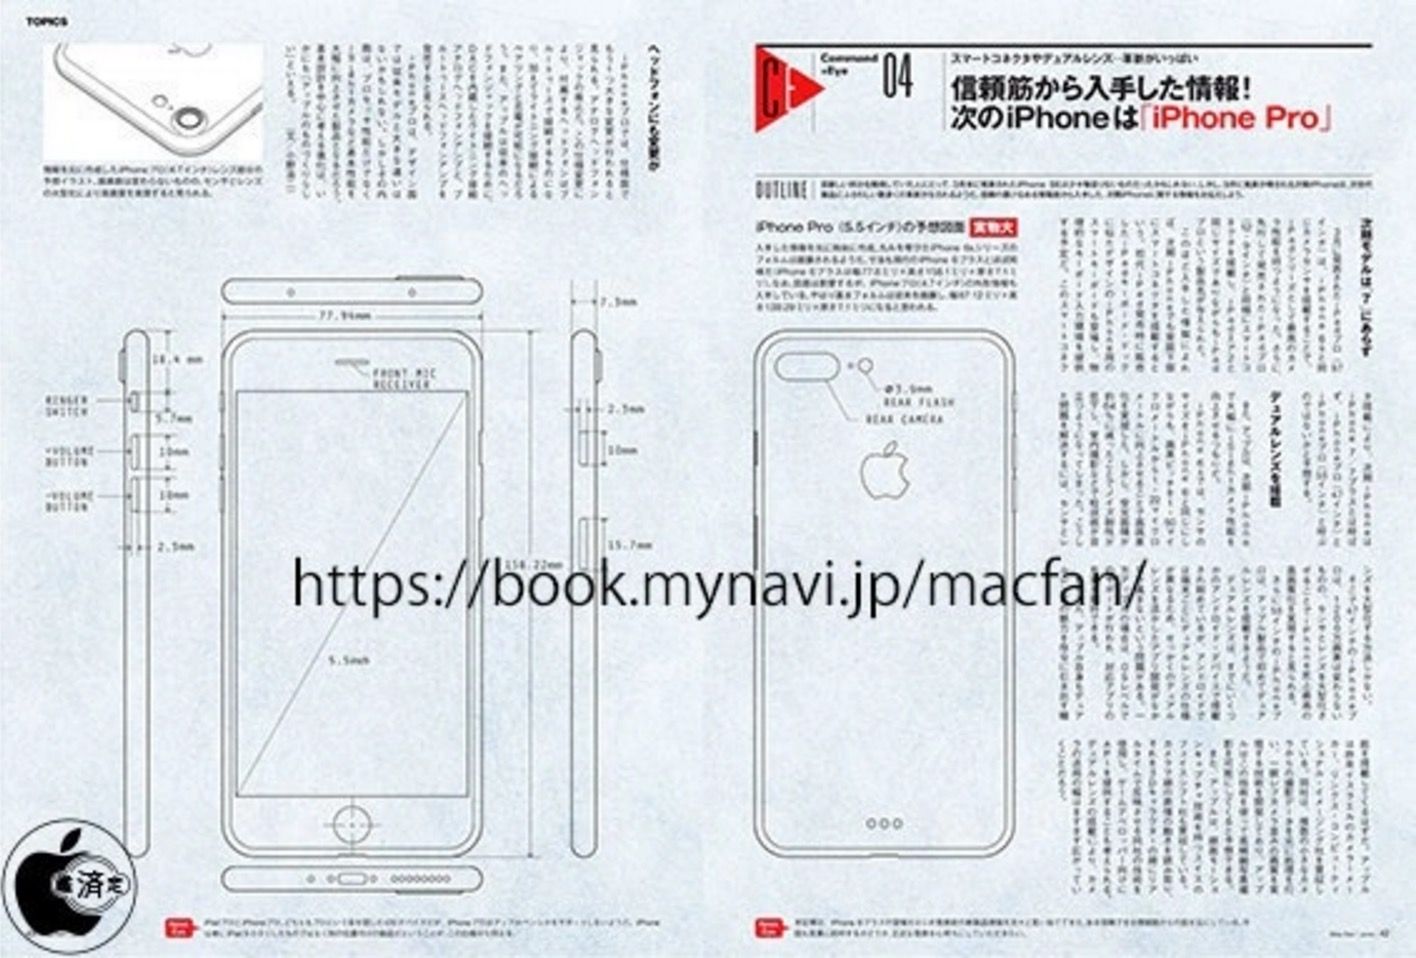 apple iphone 7 pro schematics leak shows phone design with dual cameras image 2